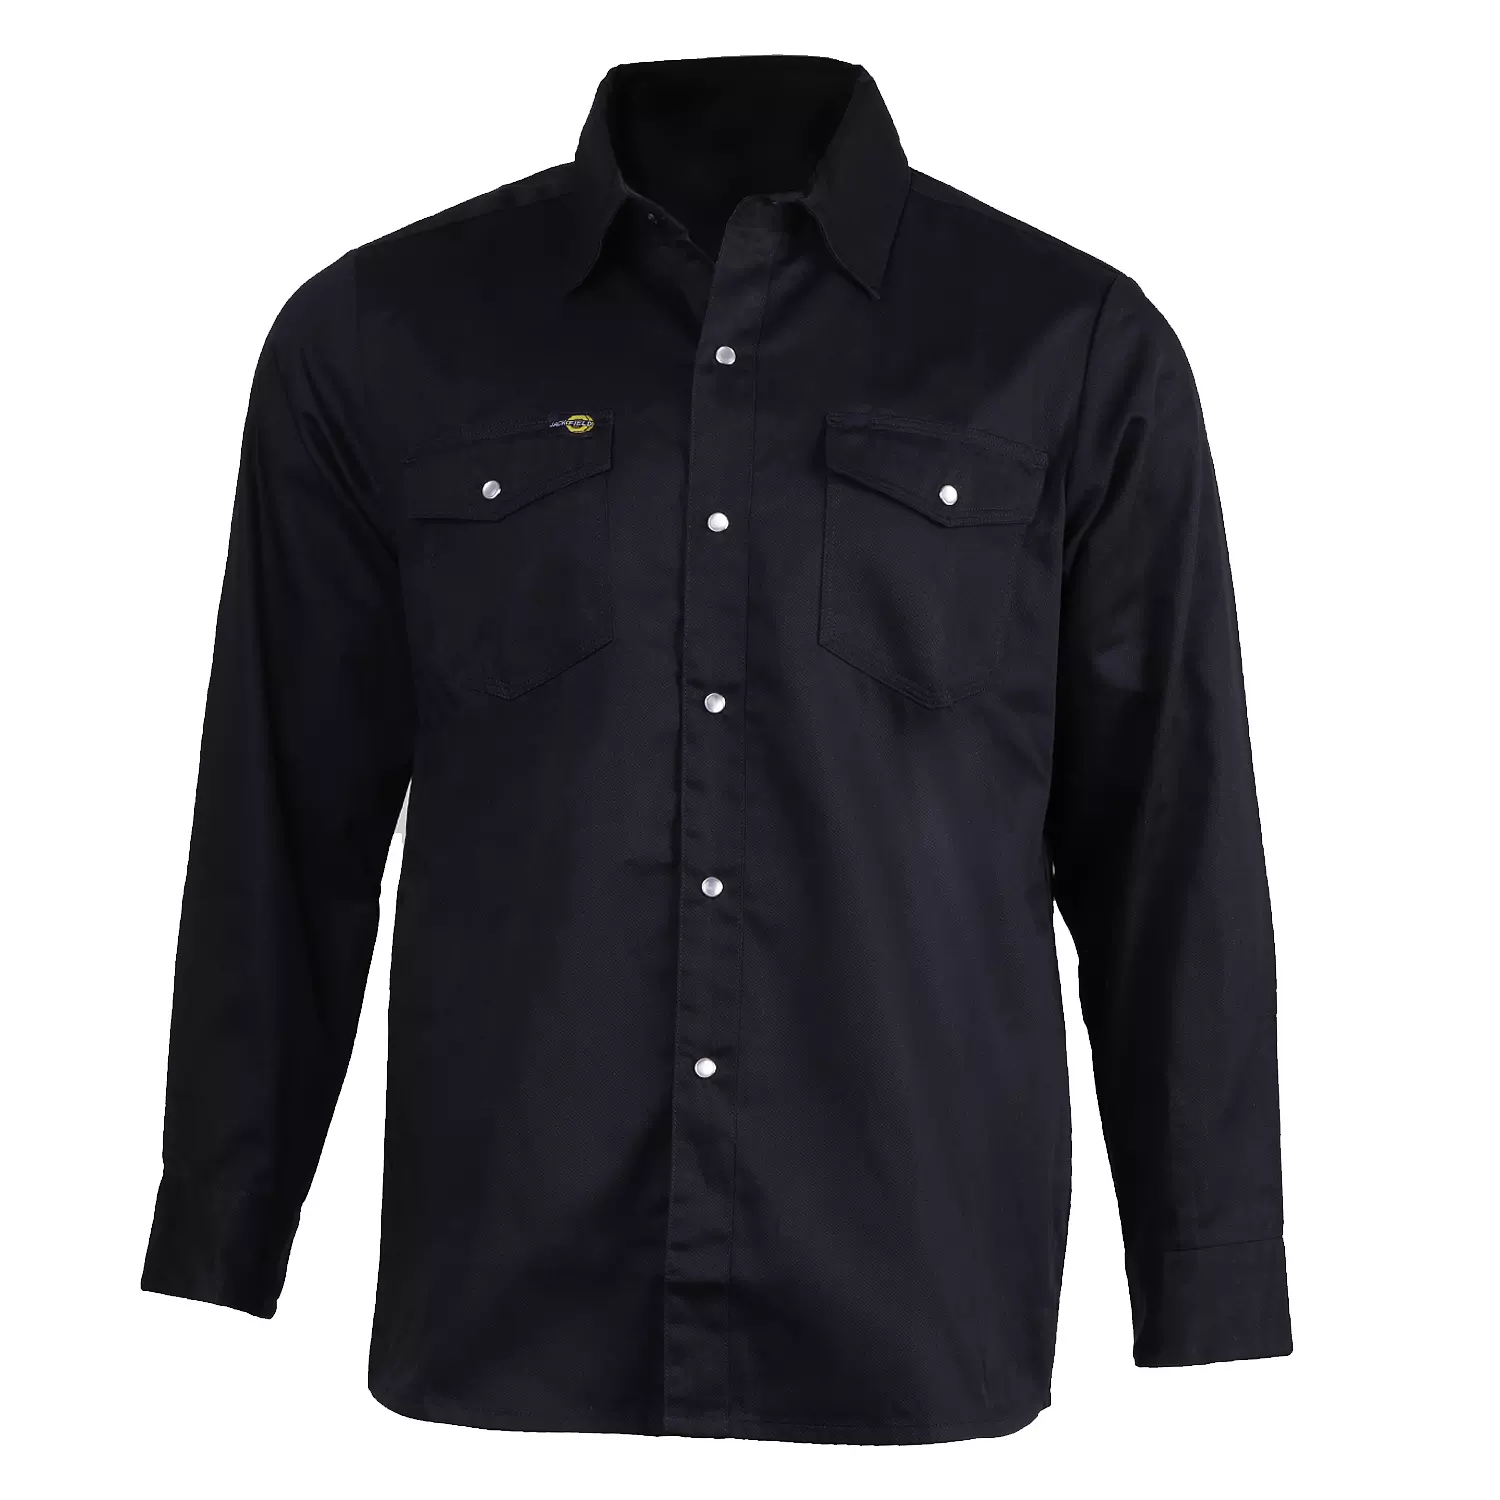 Jackfield - Work shirt, navy blue, extra extra large (XXL)